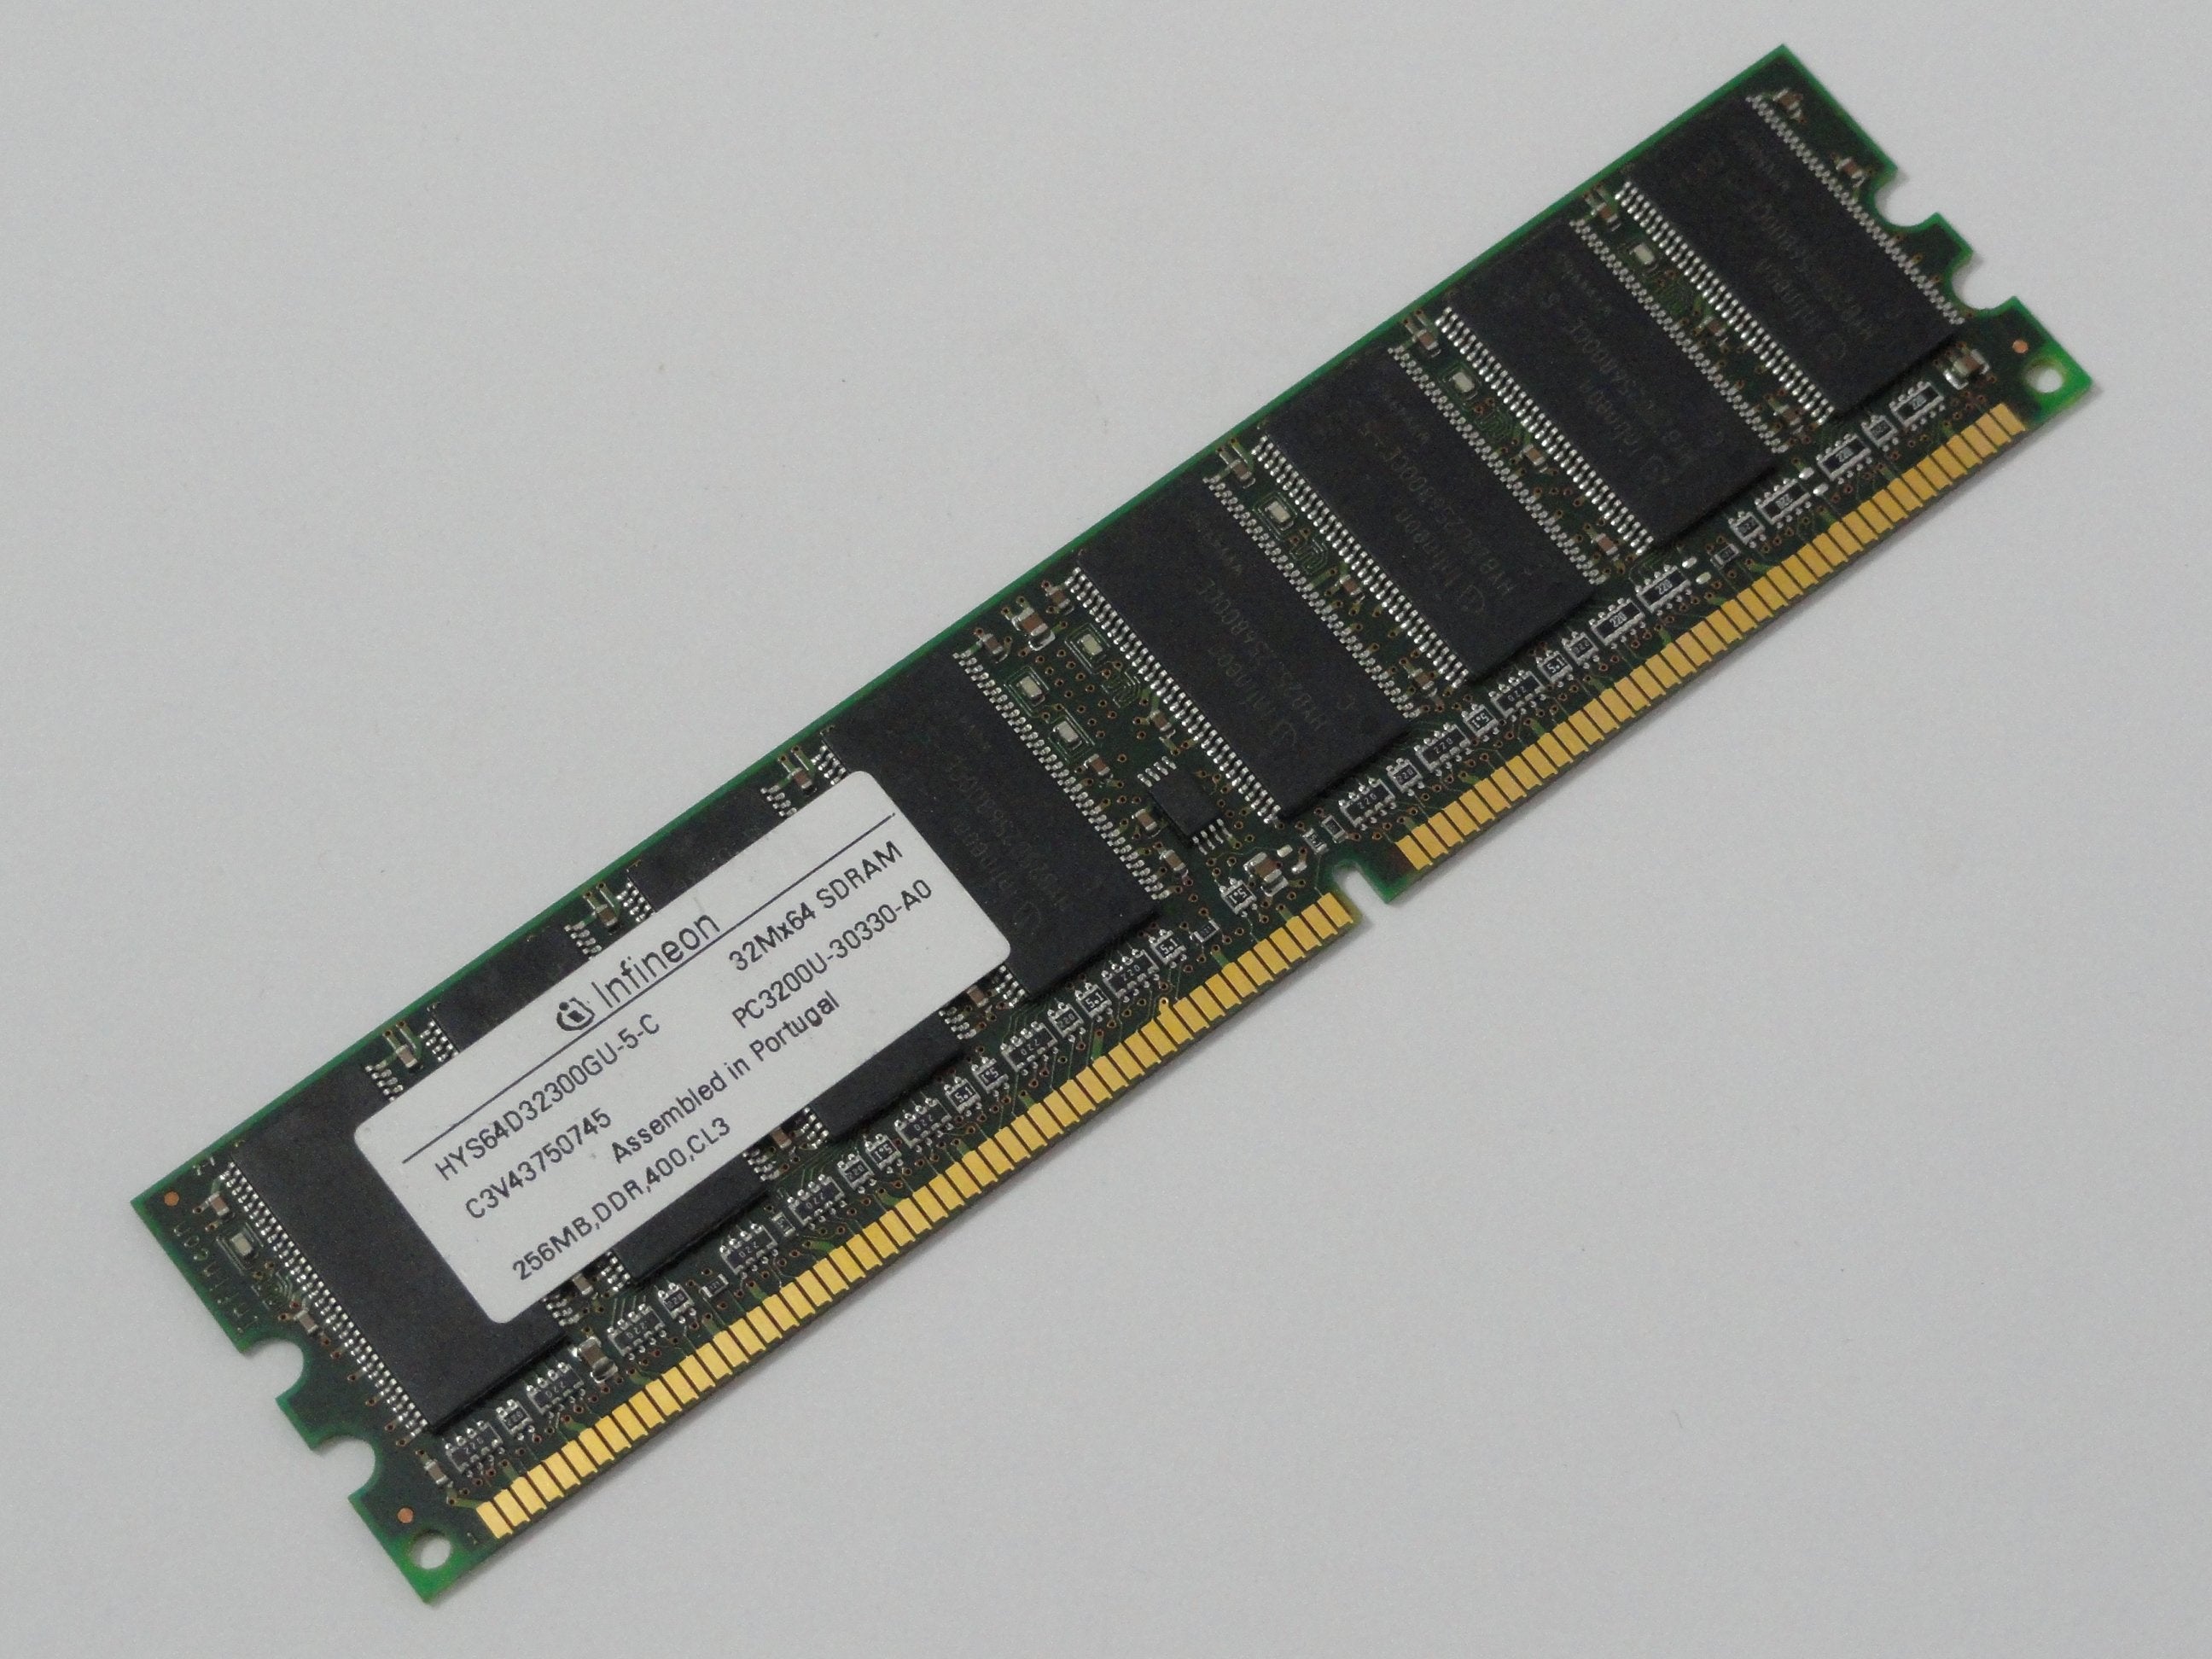 PR03948_HYS64D32300GU-5-C_256MB DDR SDRAM Modules - Image2